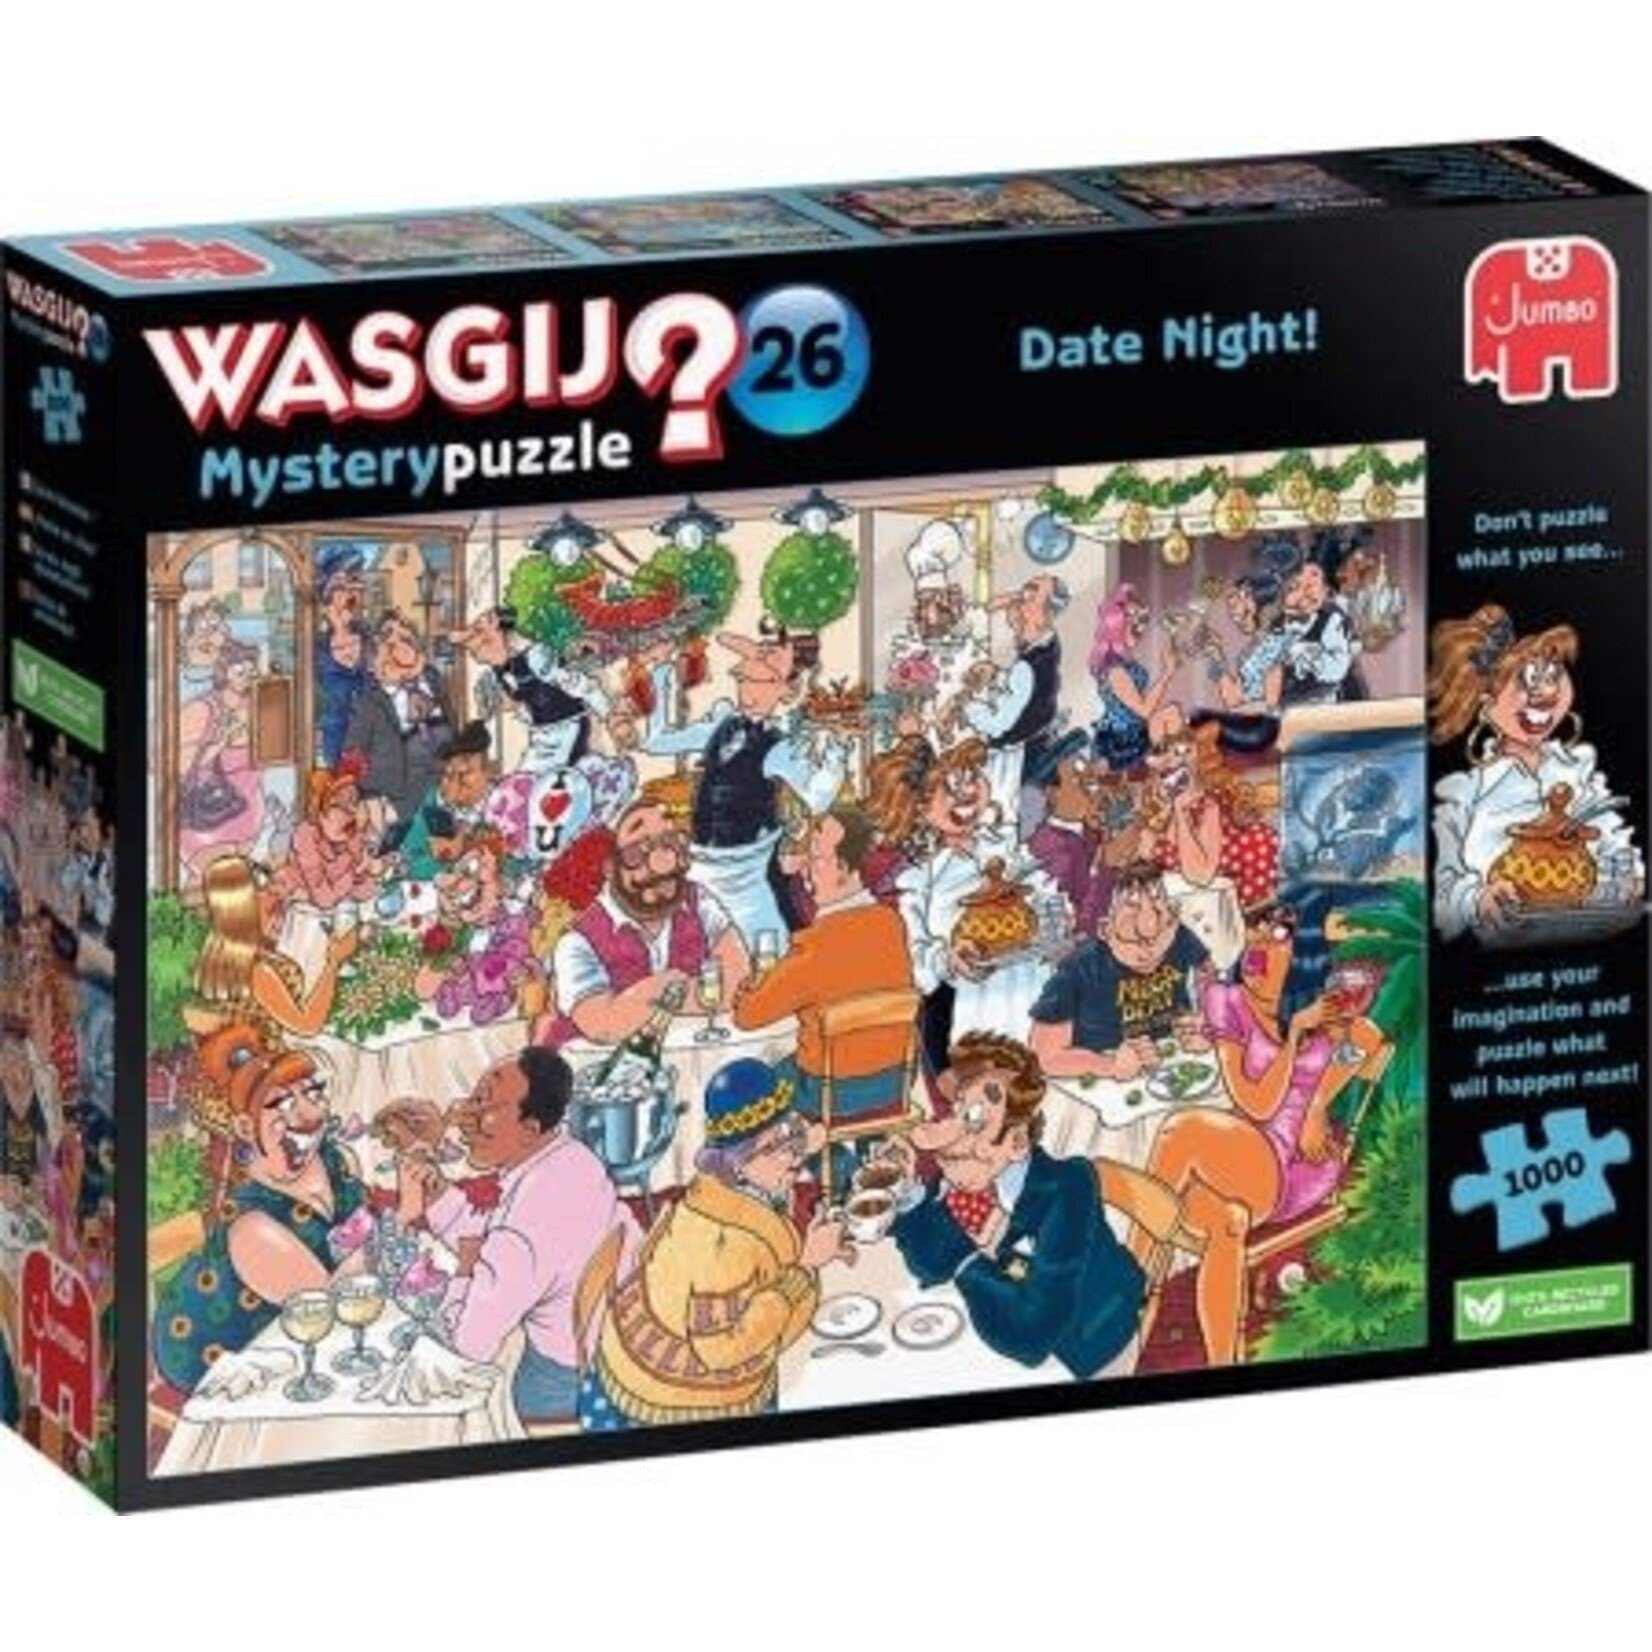 Jumbo Wasgij Mystery 26 - Date Night! (1000)